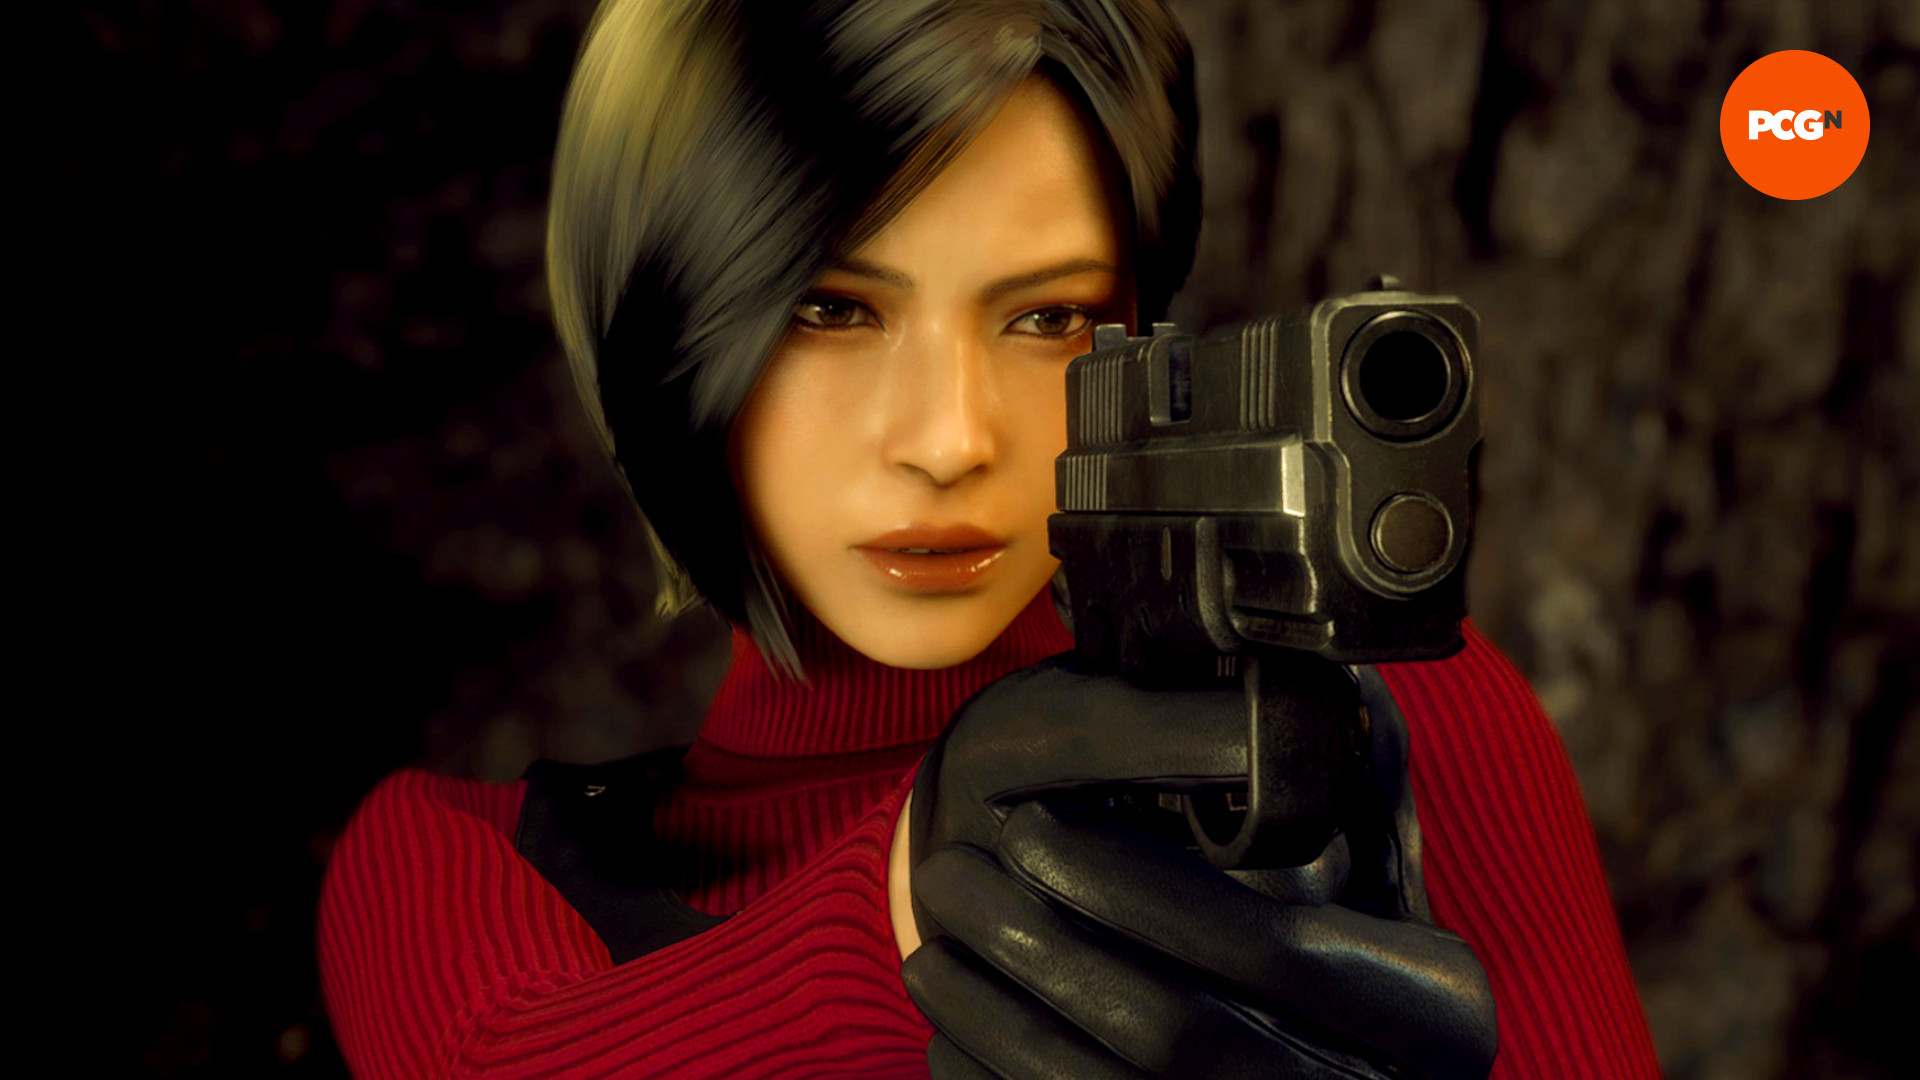 Resident Evil 4 remake Separate Ways DLC: Multiple Verdugo boss